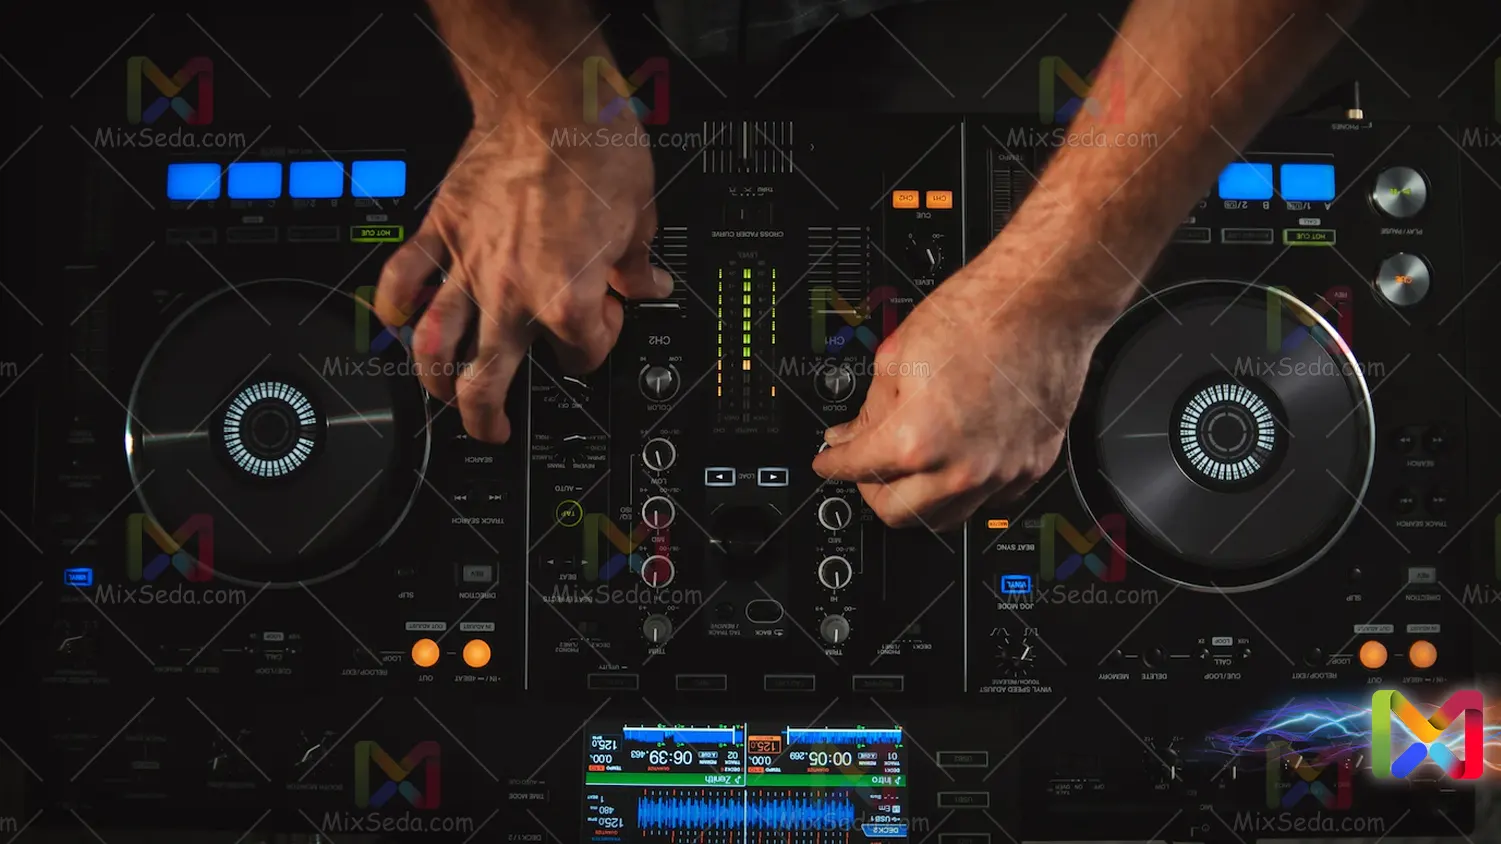 DJ mixer capabilities